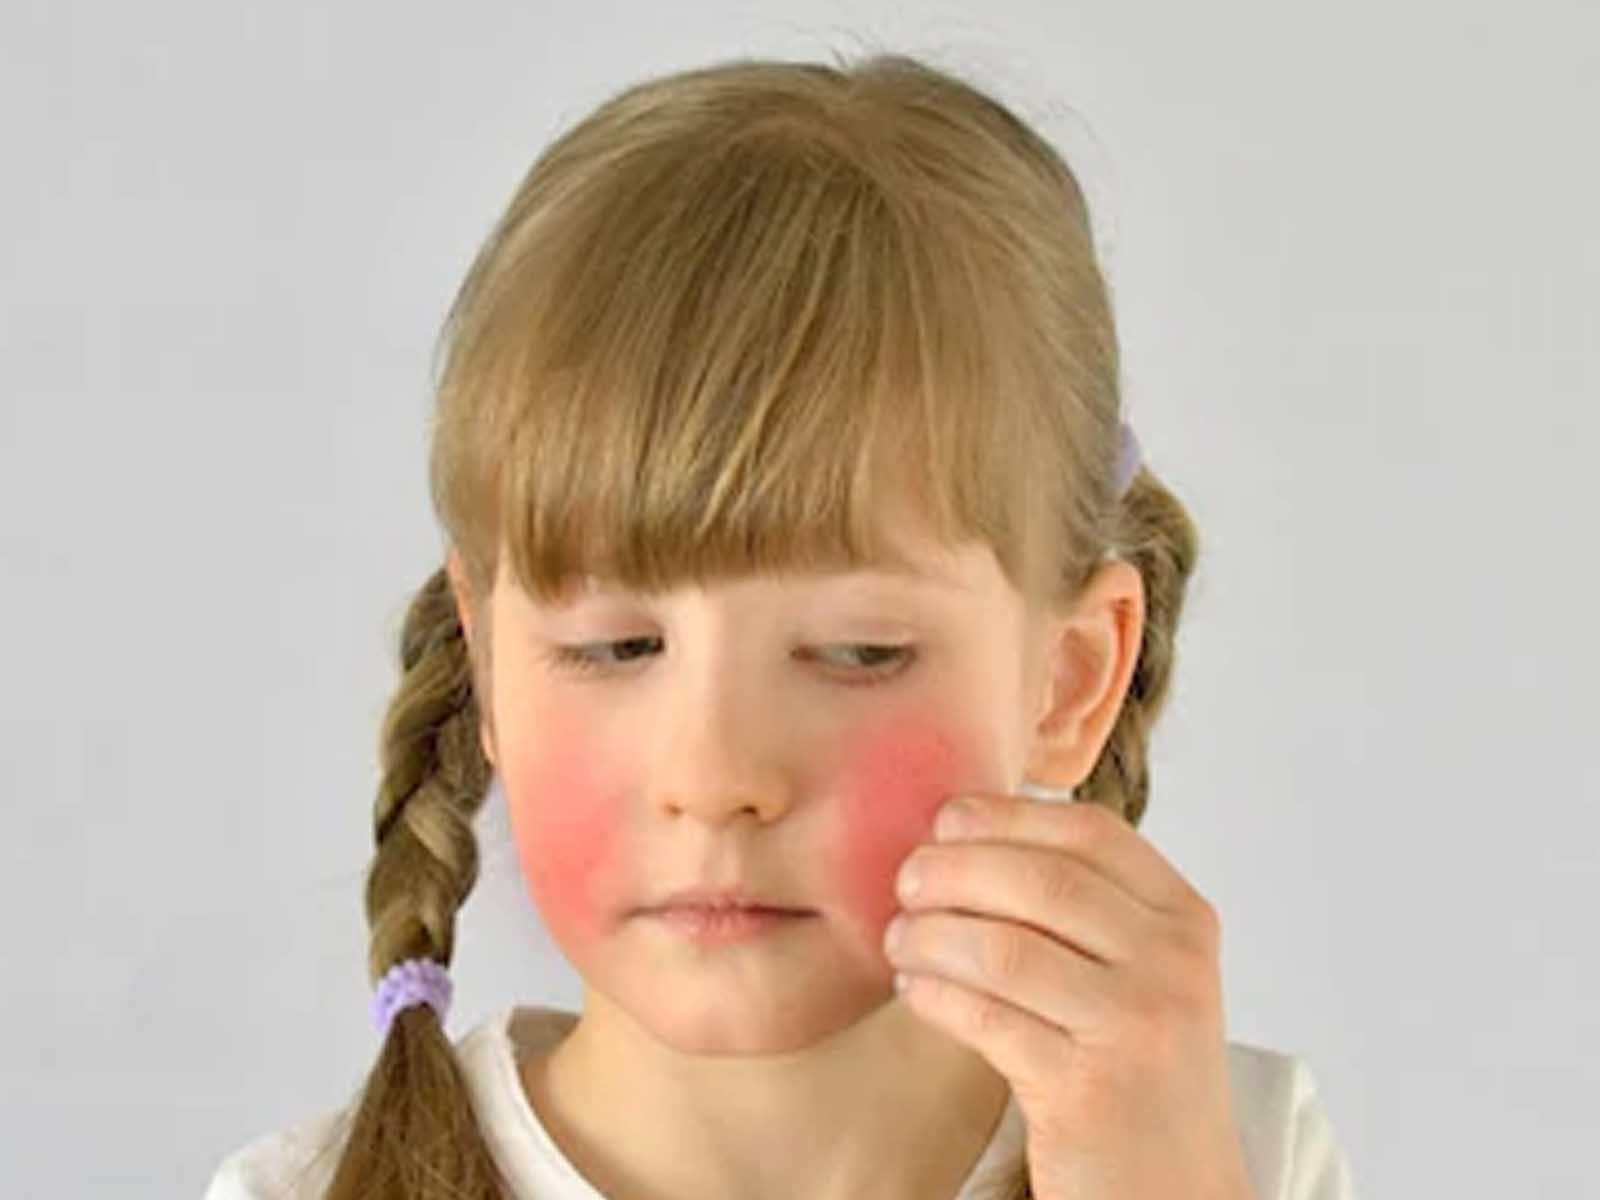 Allergy in kids: ਬੱਚੇ ਨੂੰ ਇਨ੍ਹਾਂ ਕਾਰਨਾਂ ਕਰਕੇ ਵੀ ਹੋ ਸਕਦੀ ਹੈ ਐਲਰਜੀ, ਜਾਣੋ ਘਰੇਲੂ ਇਲਾਜ 